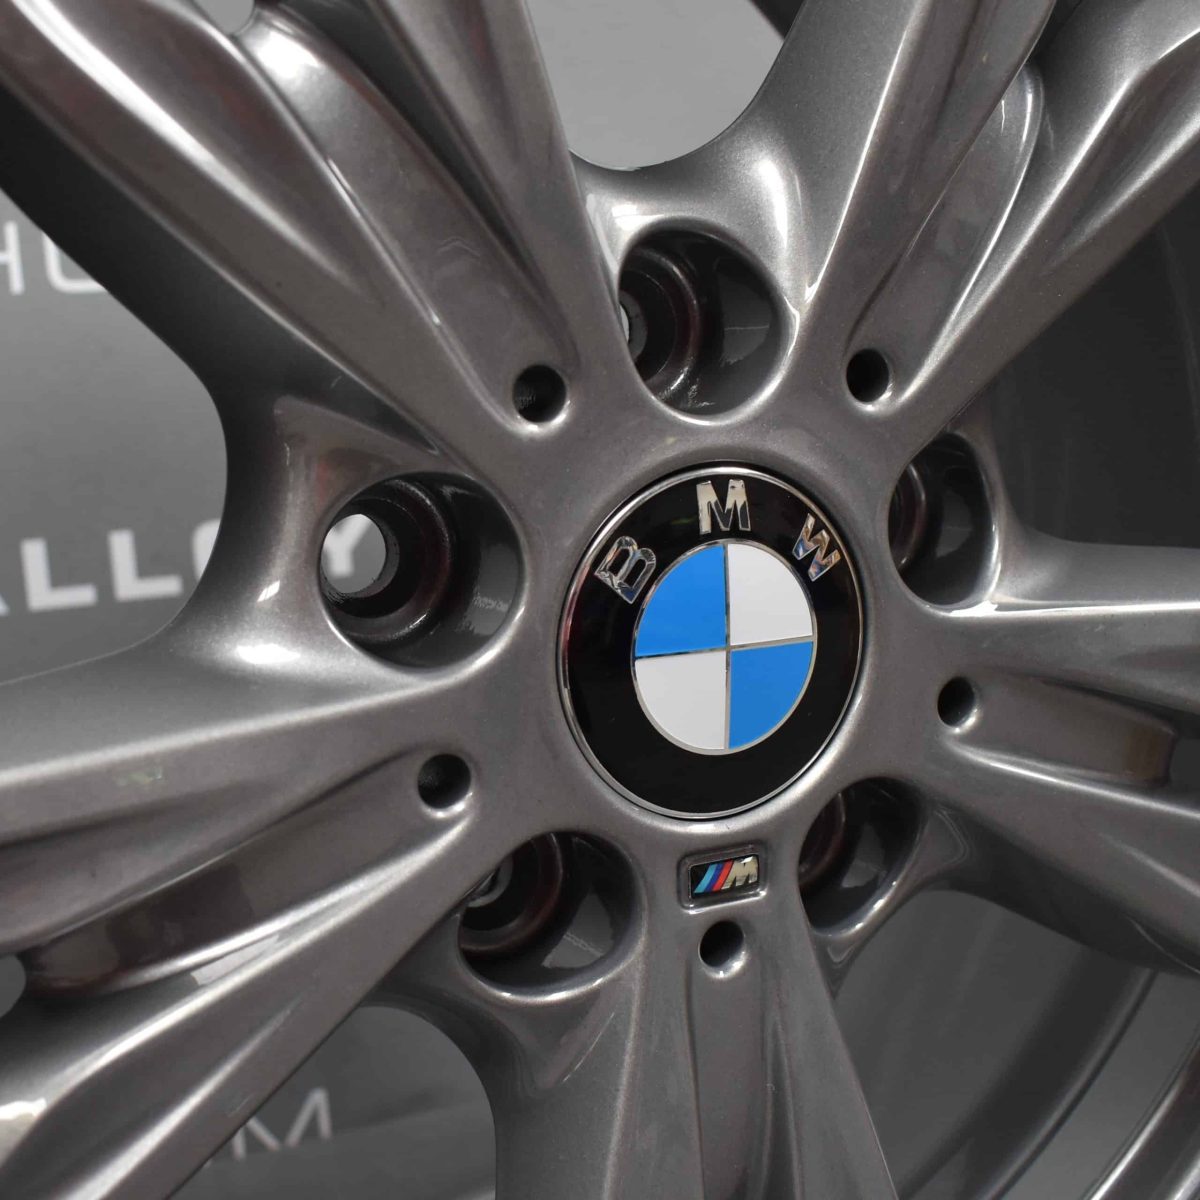 Genuine BMW 1/2 Series 436M Sport 18" Inch Alloy Wheels with Ferric Grey Finish 36117845870 36117845871